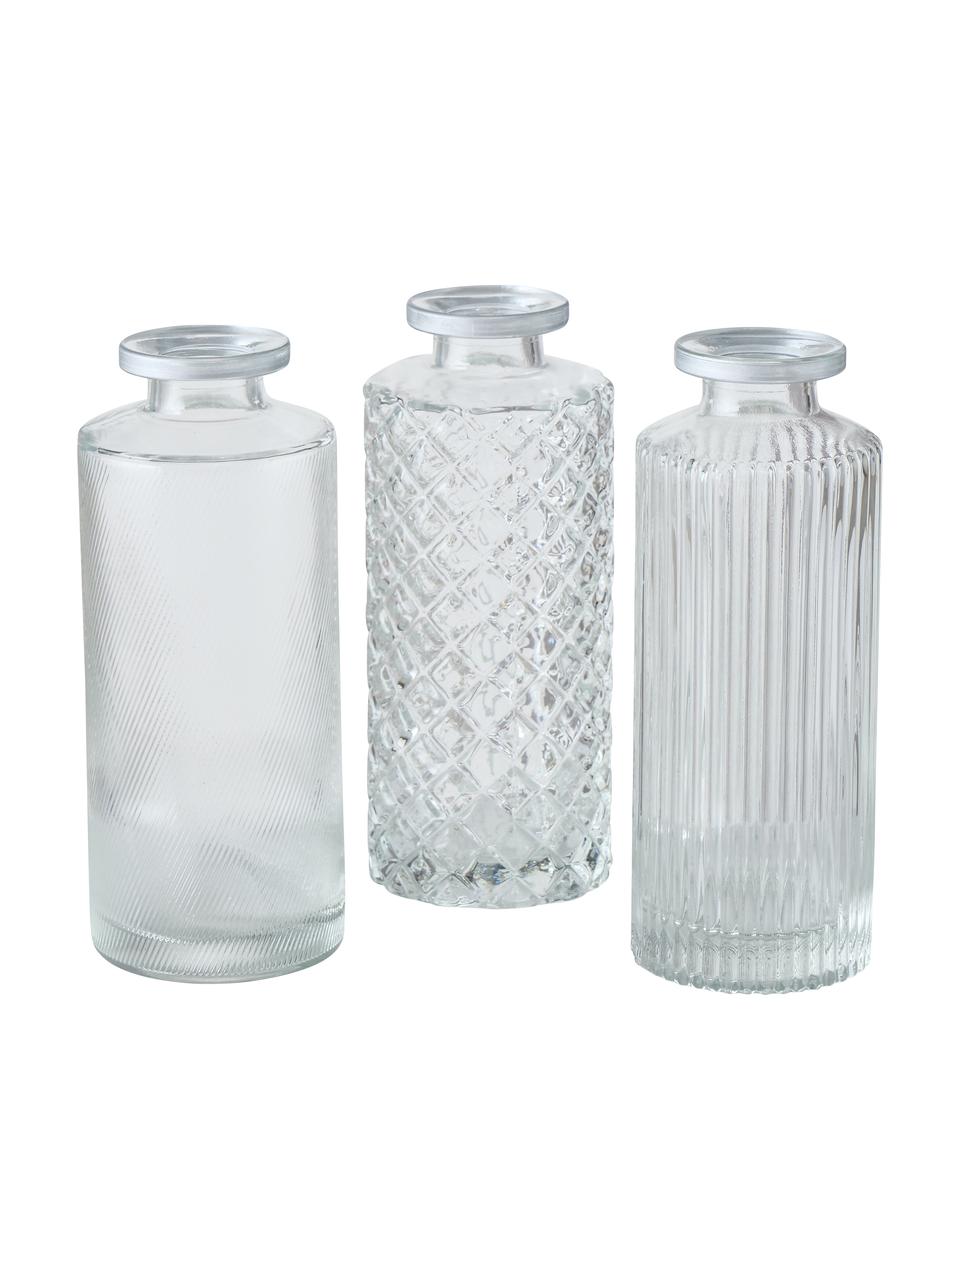 Kleines Vasen-Set Adore aus Glas, 3-tlg., Glas, Transparent, Ø 5 x H 13 cm